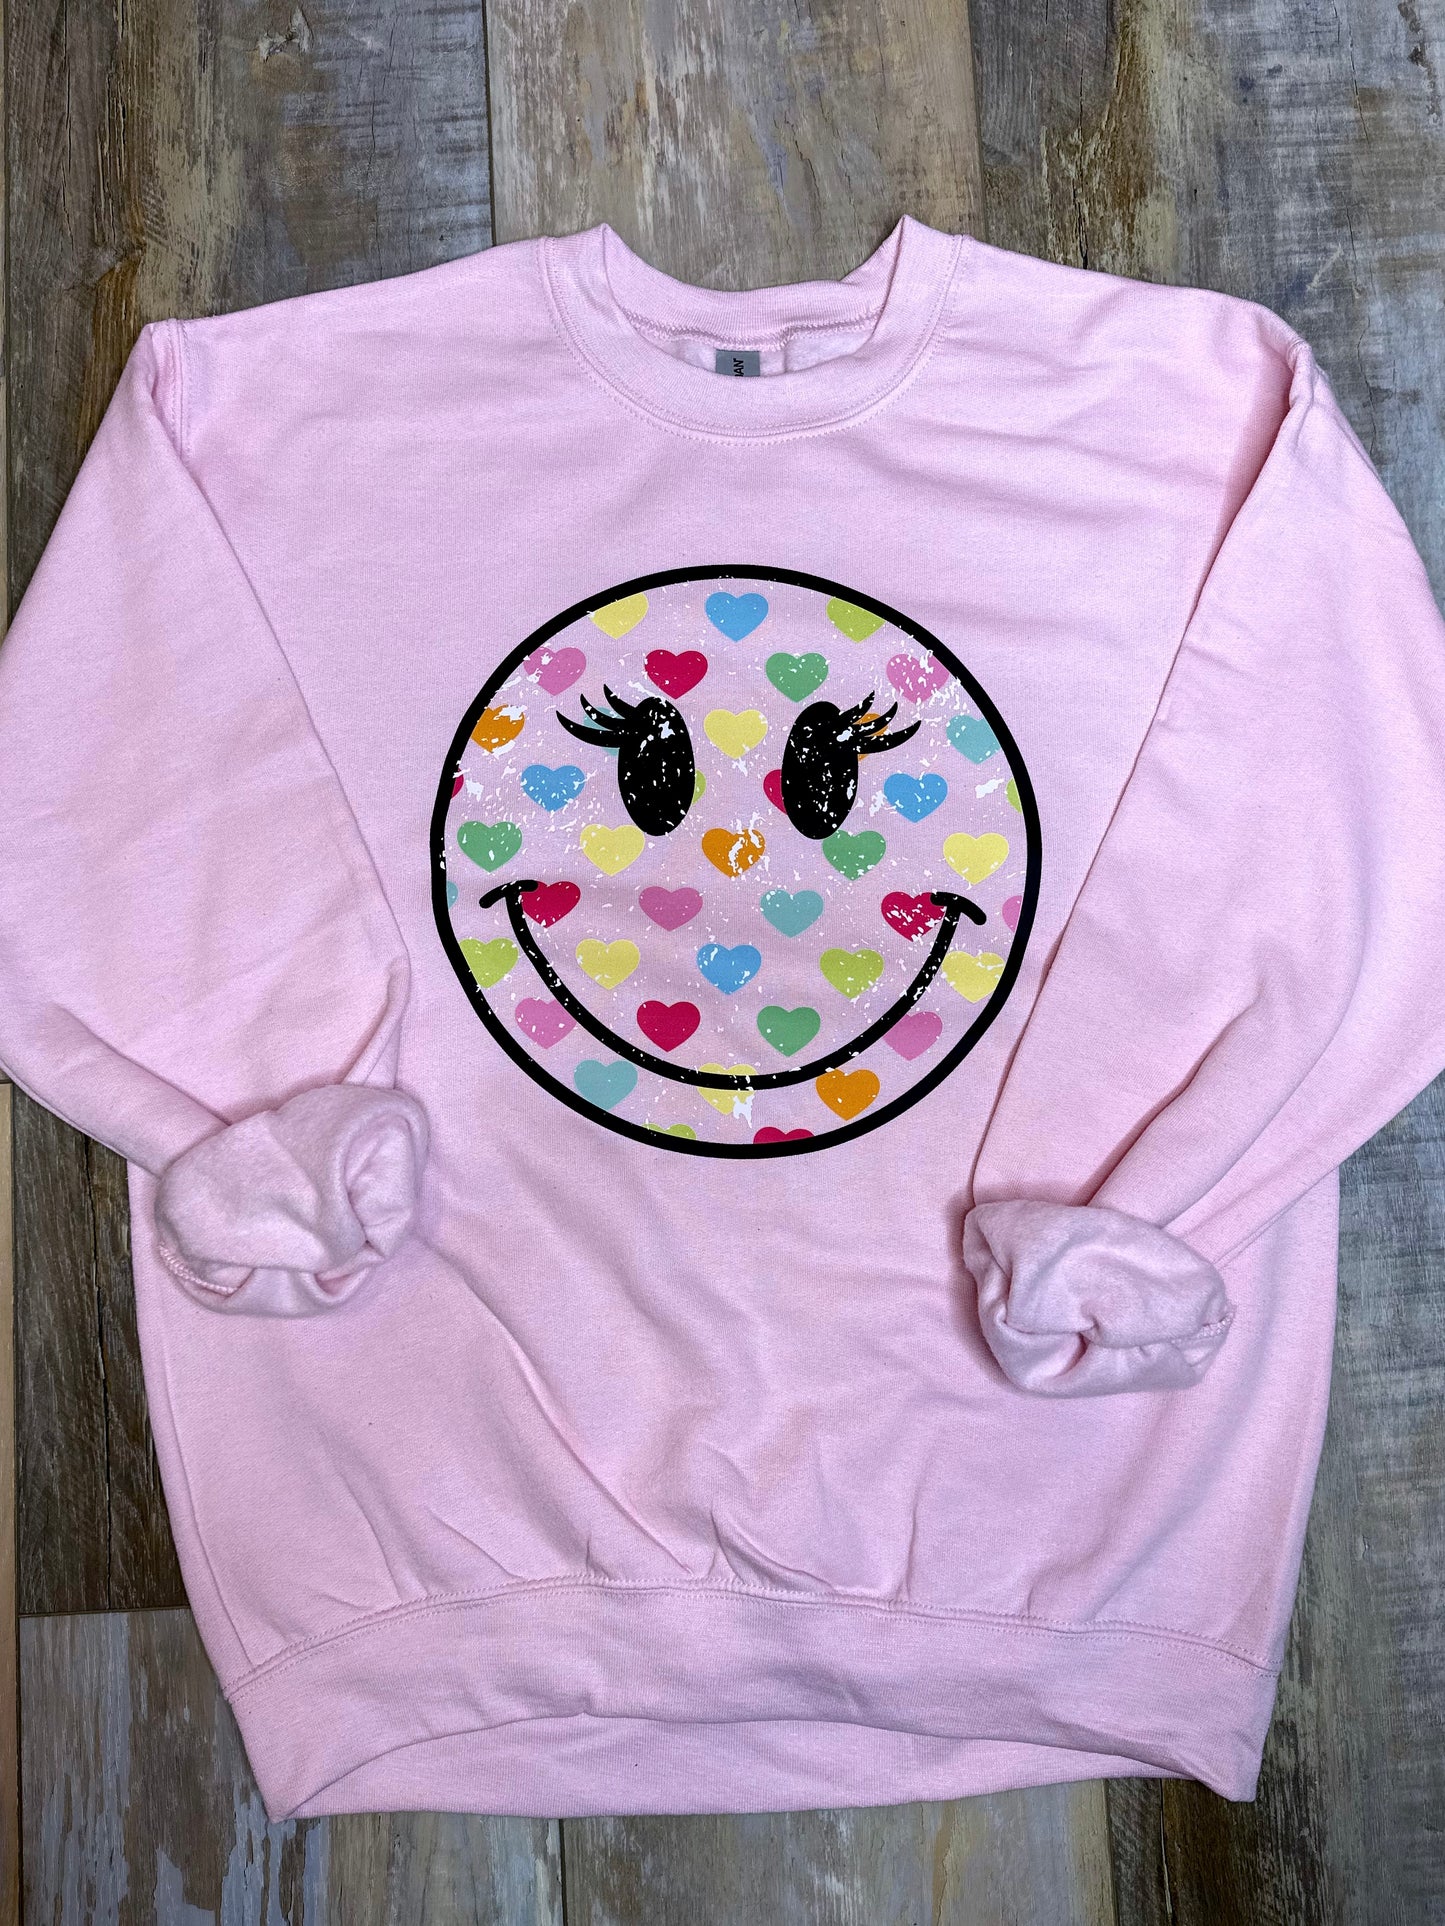 Distressed Hearts Smiley Sweatshirt